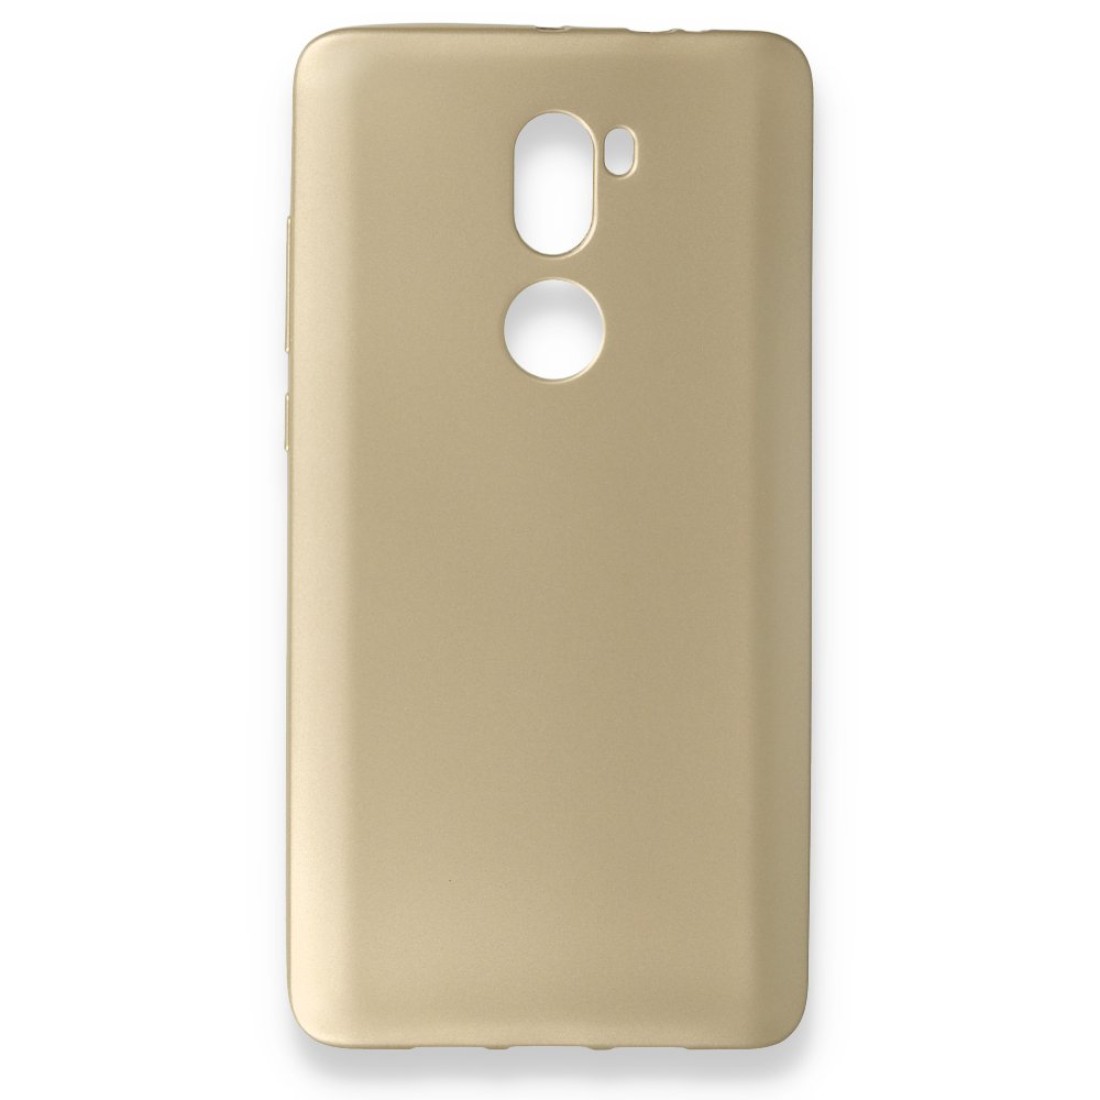 Xiaomi Mi 5S Plus Kılıf Premium Rubber Silikon - Gold